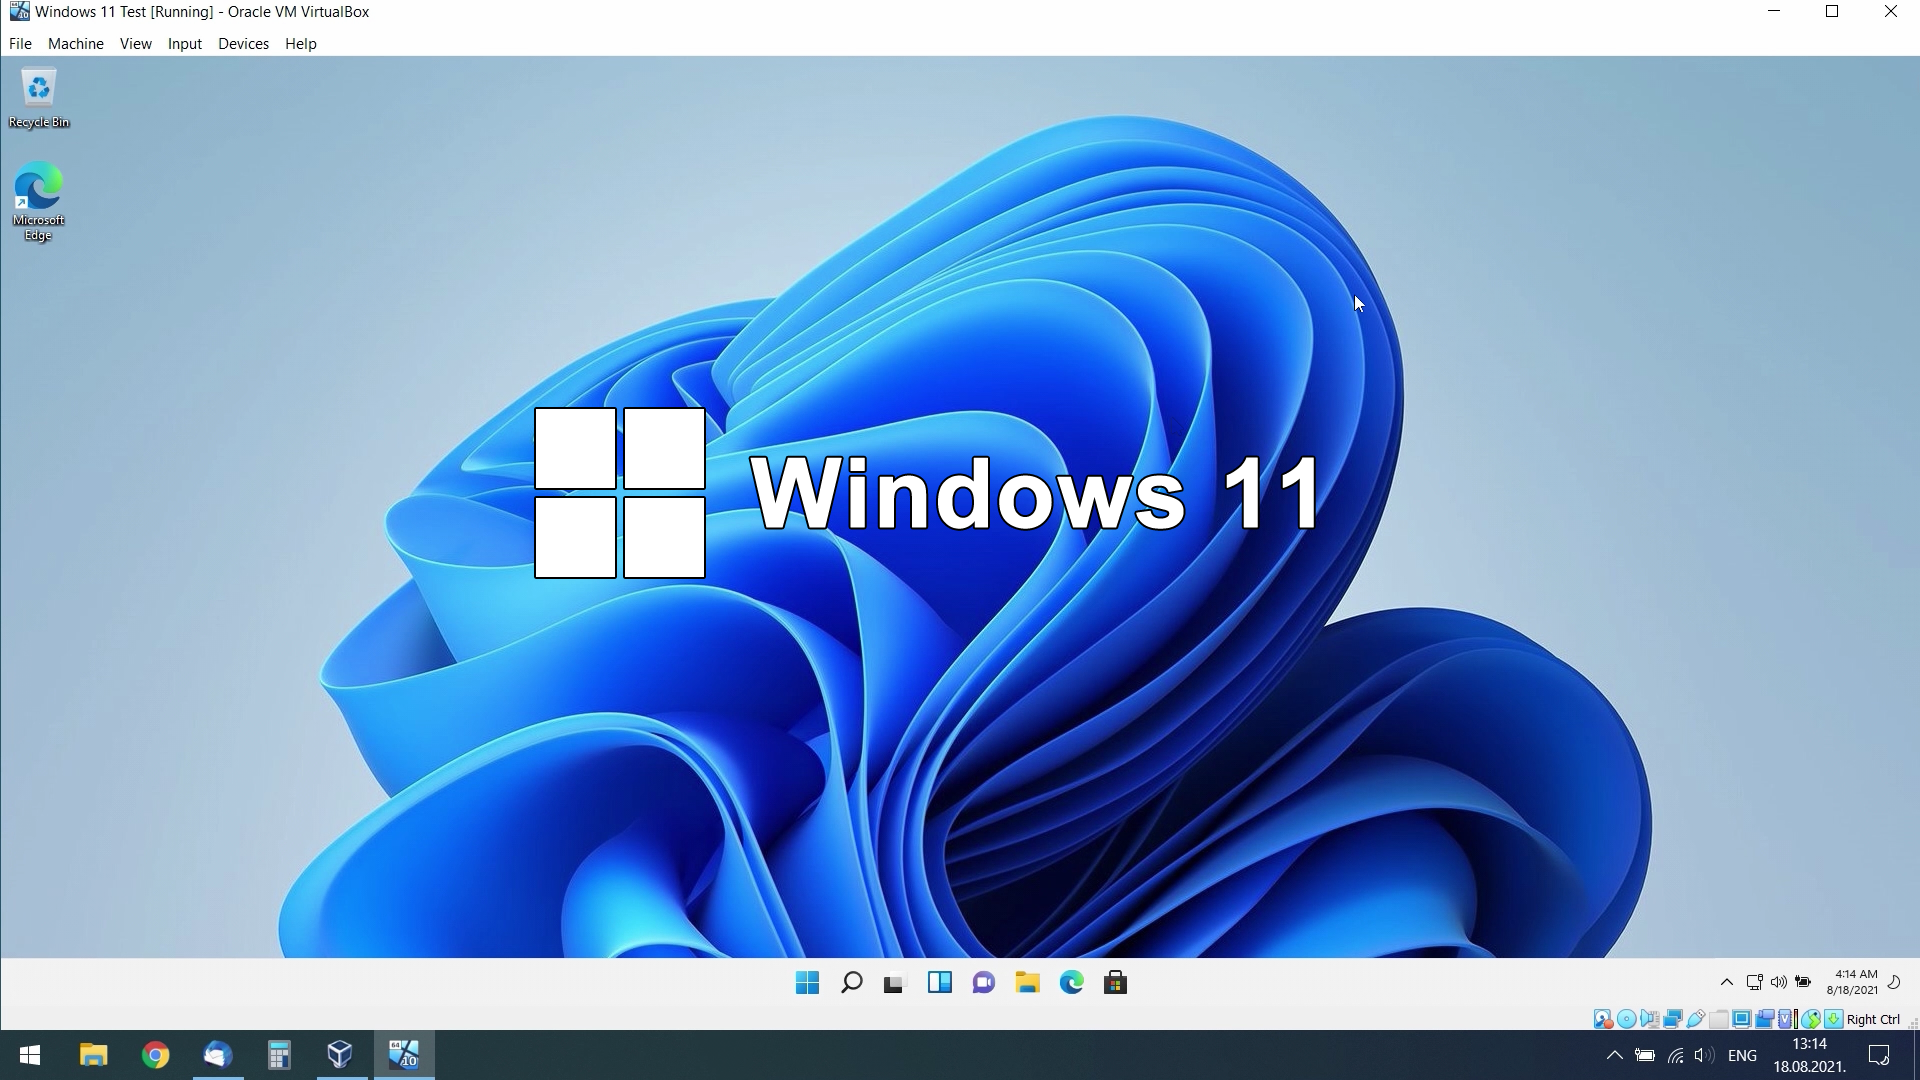 virtualbox for windows 10 pro